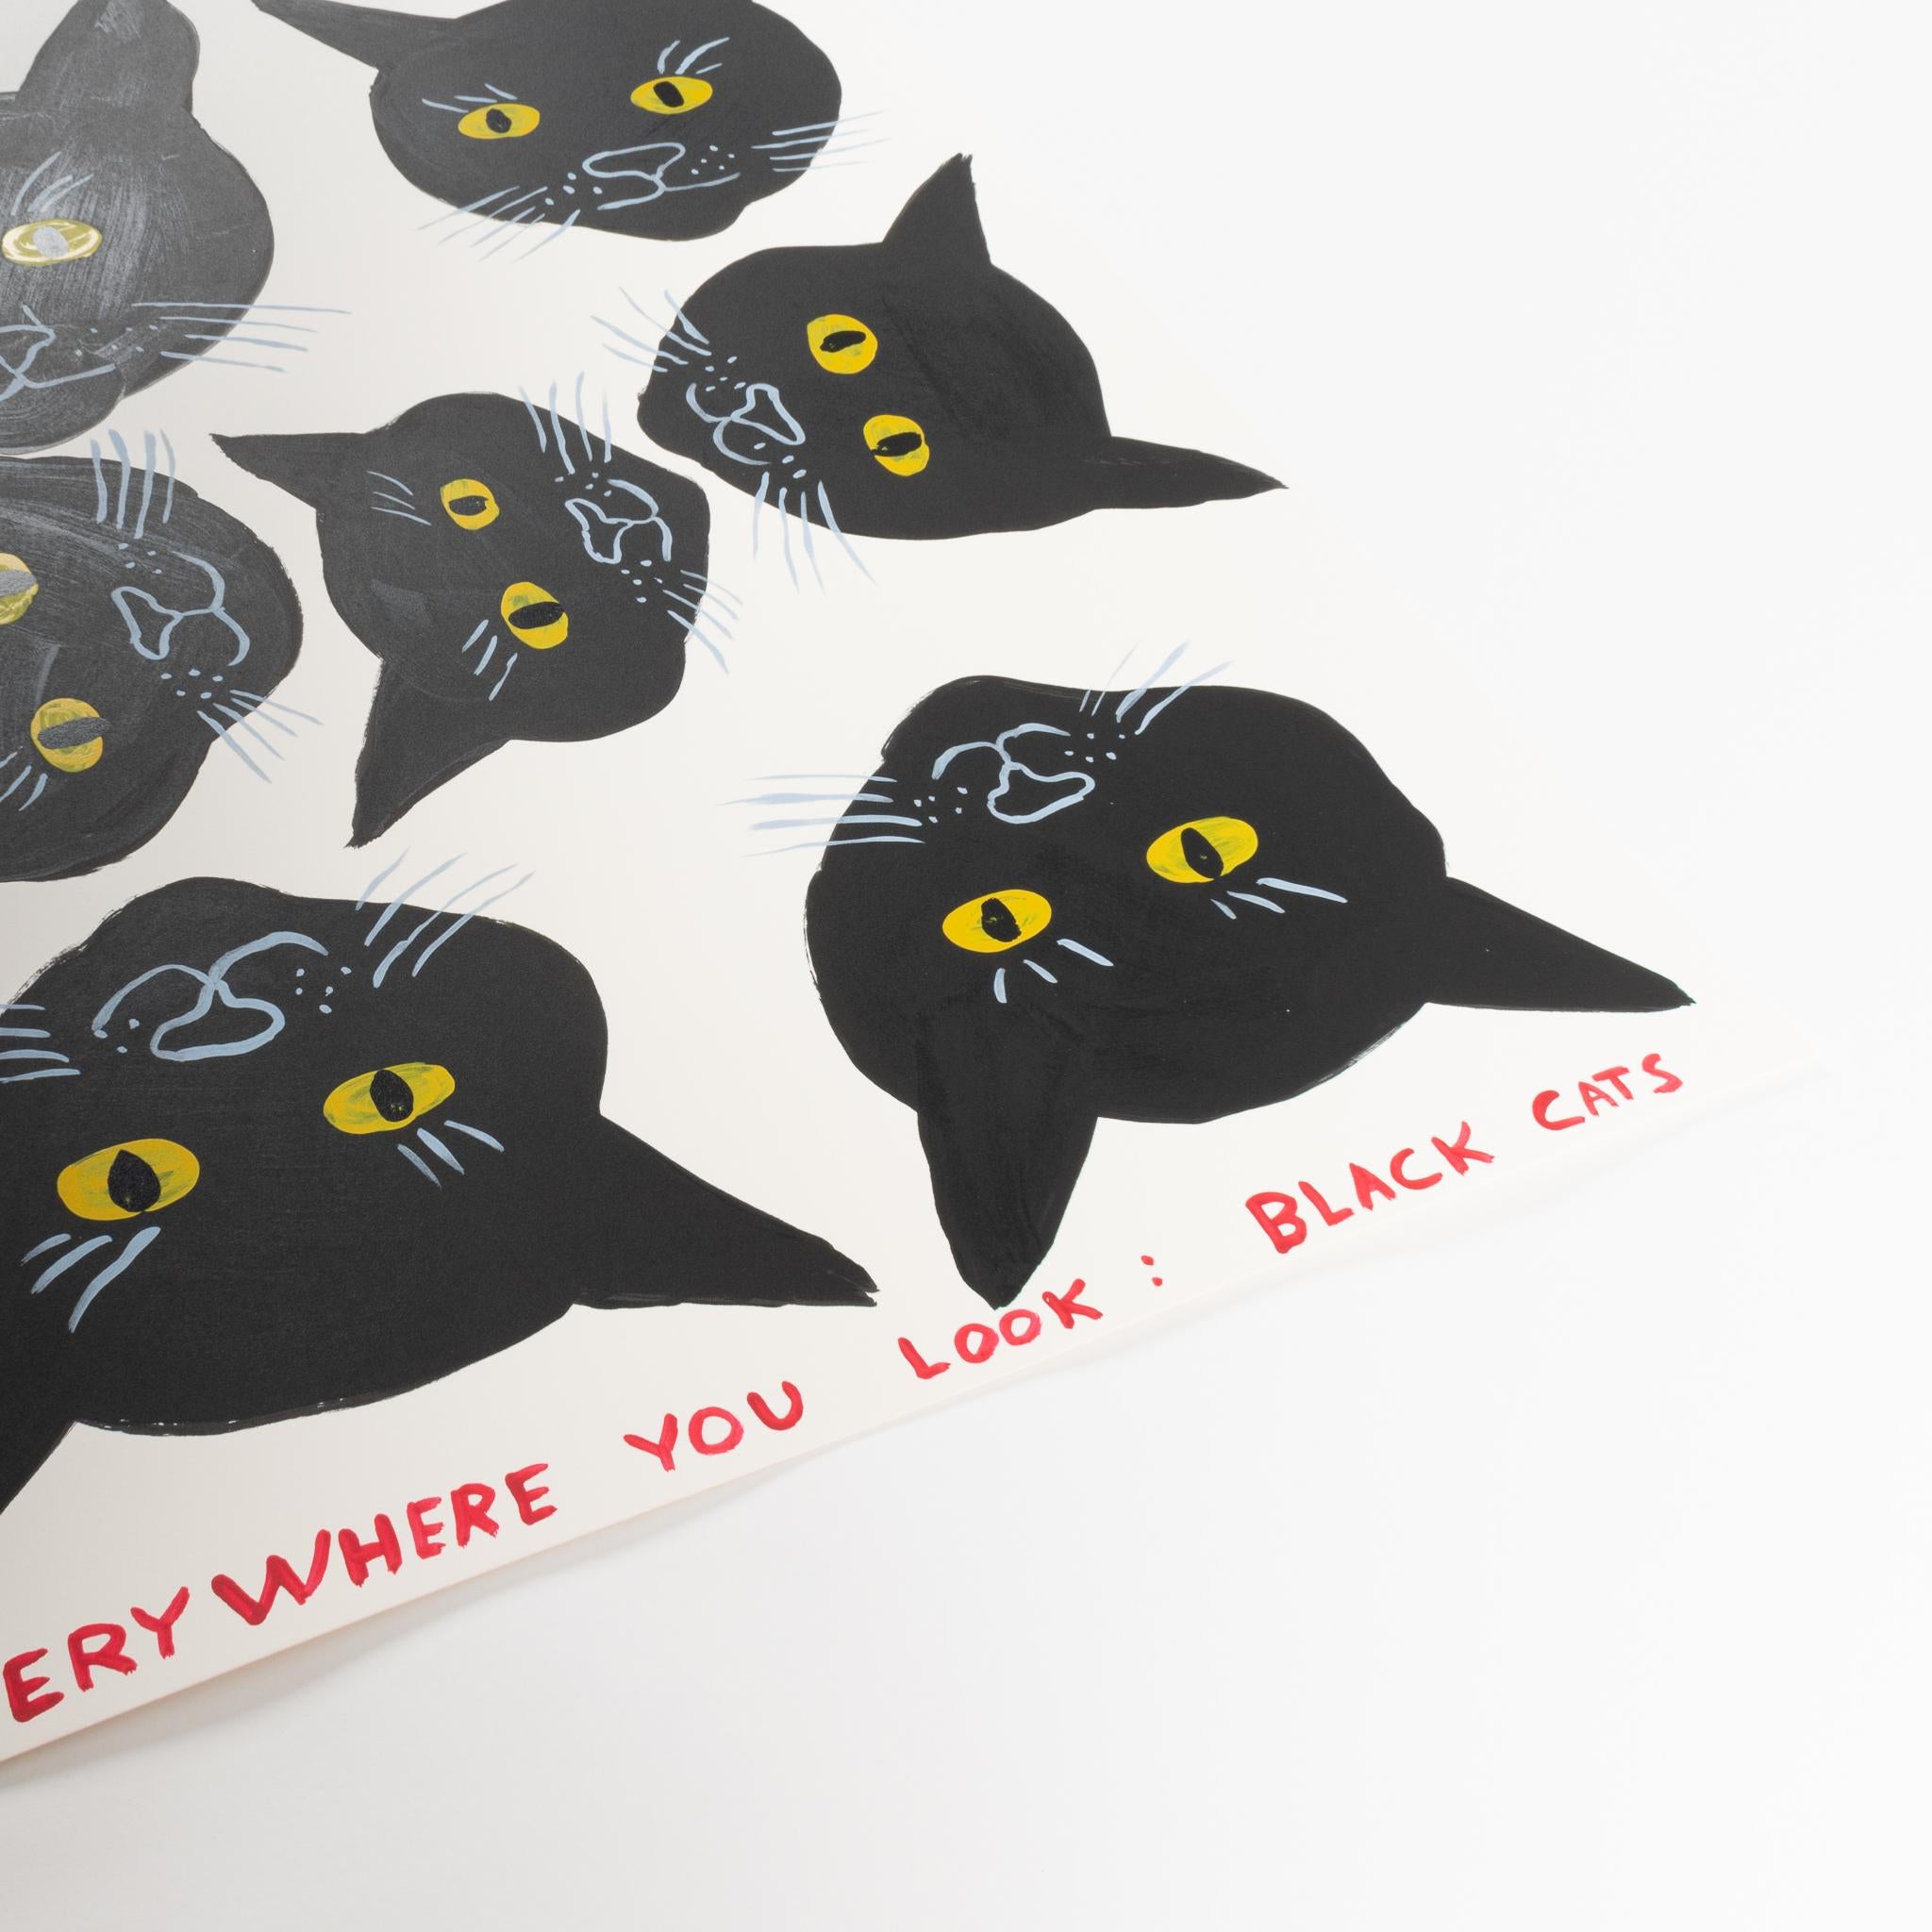 Black Cats - Print by David Shrigley